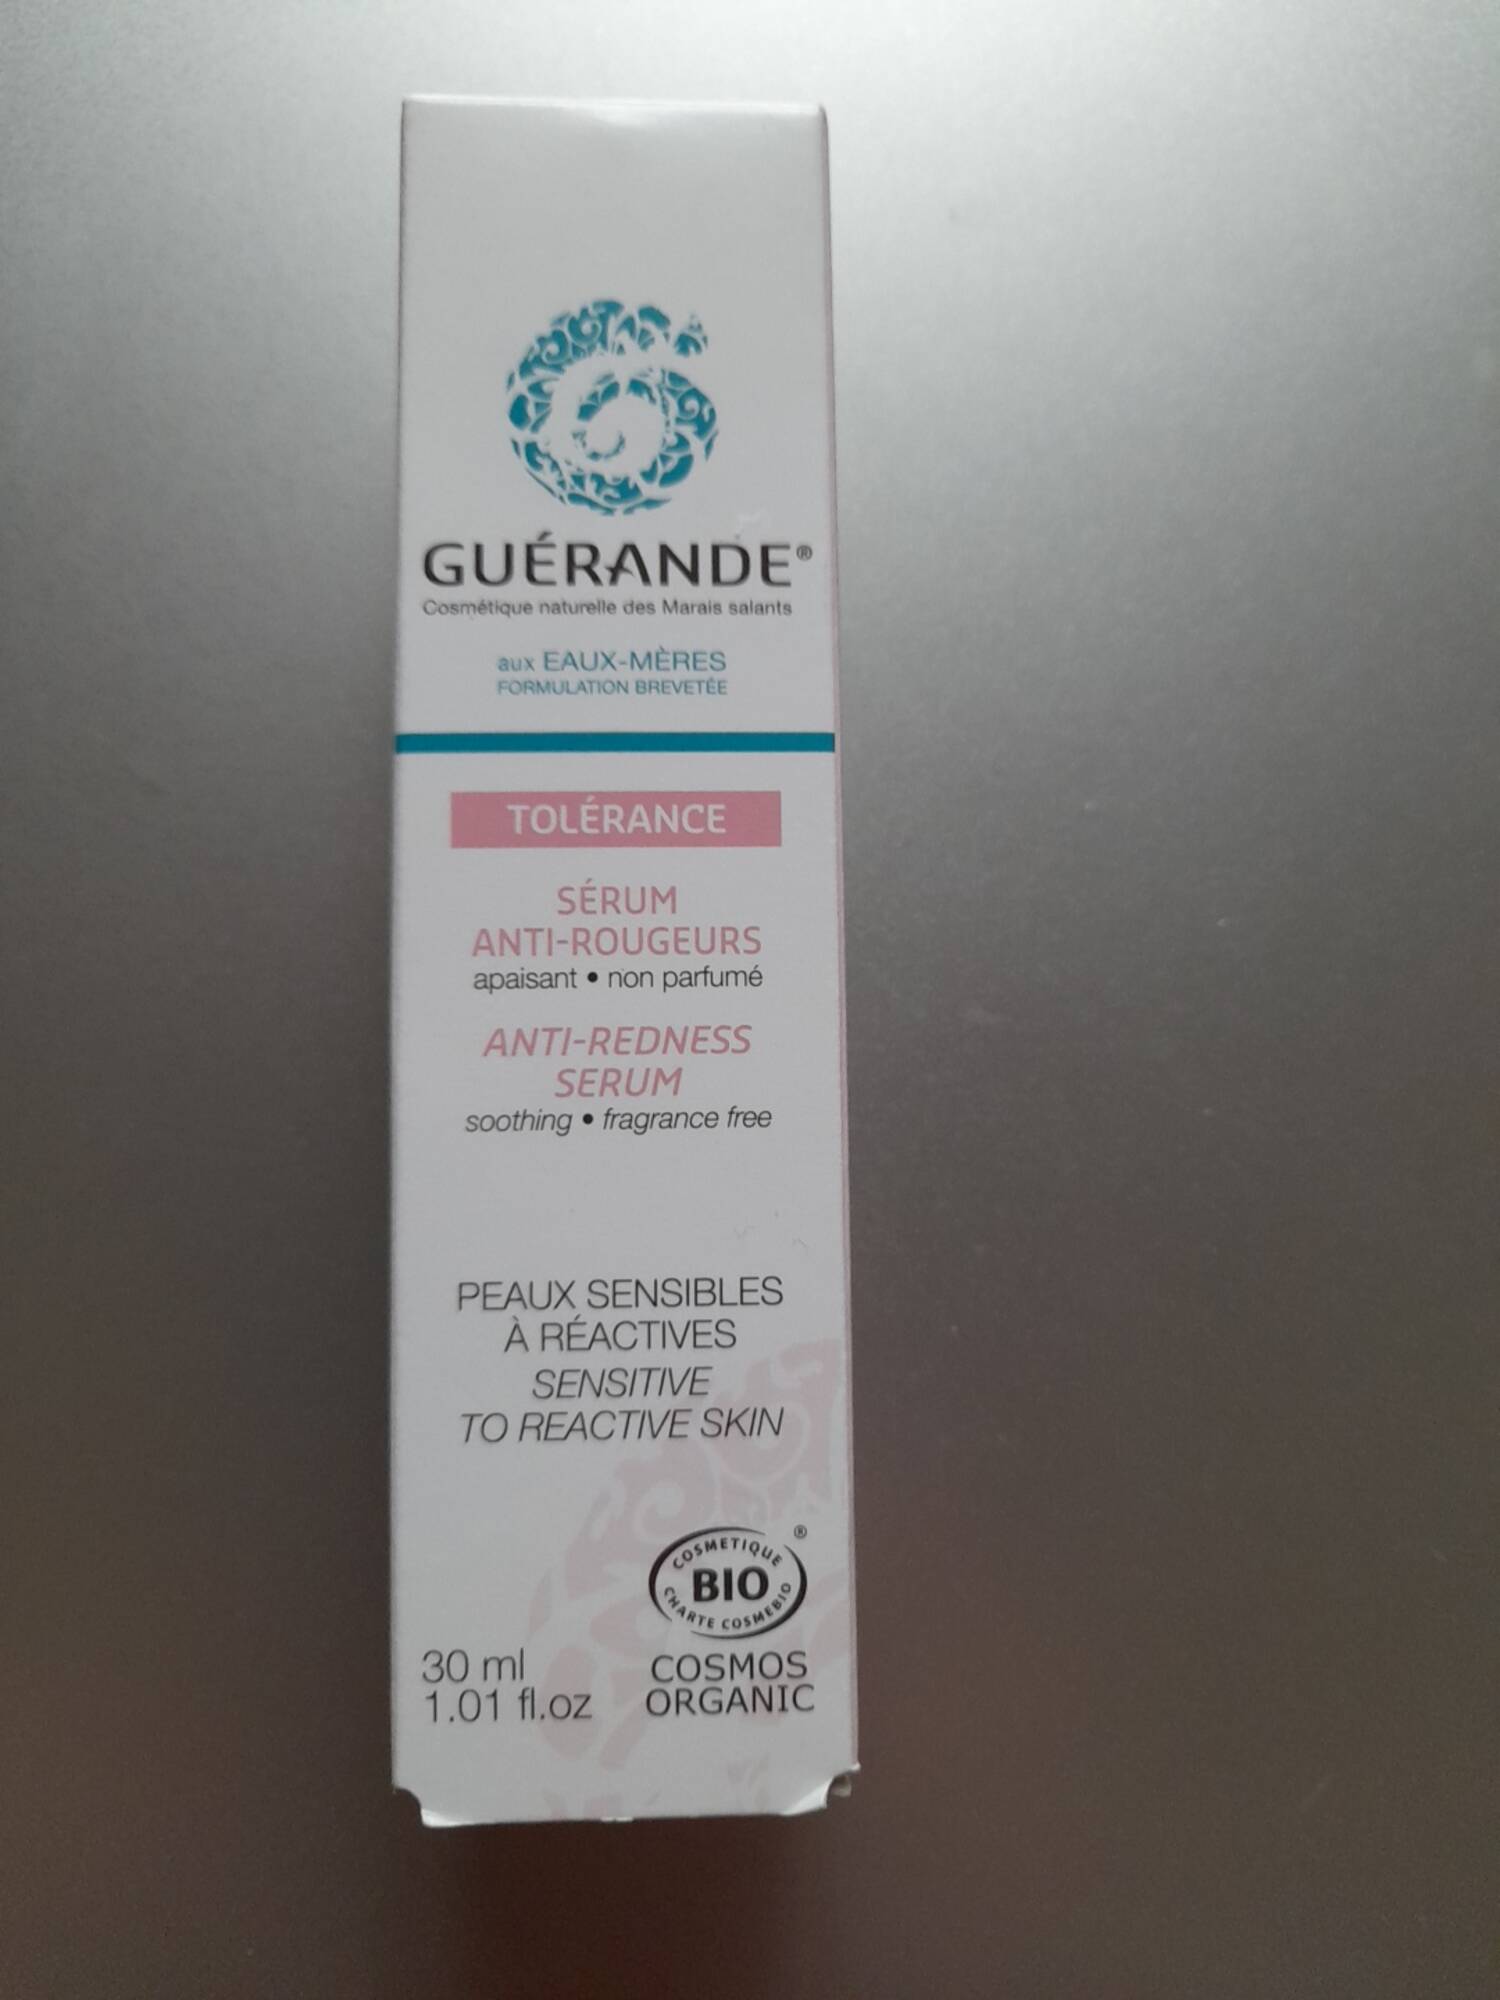 GUÉRANDE - Tolérance - Sérum anti-rougeurs